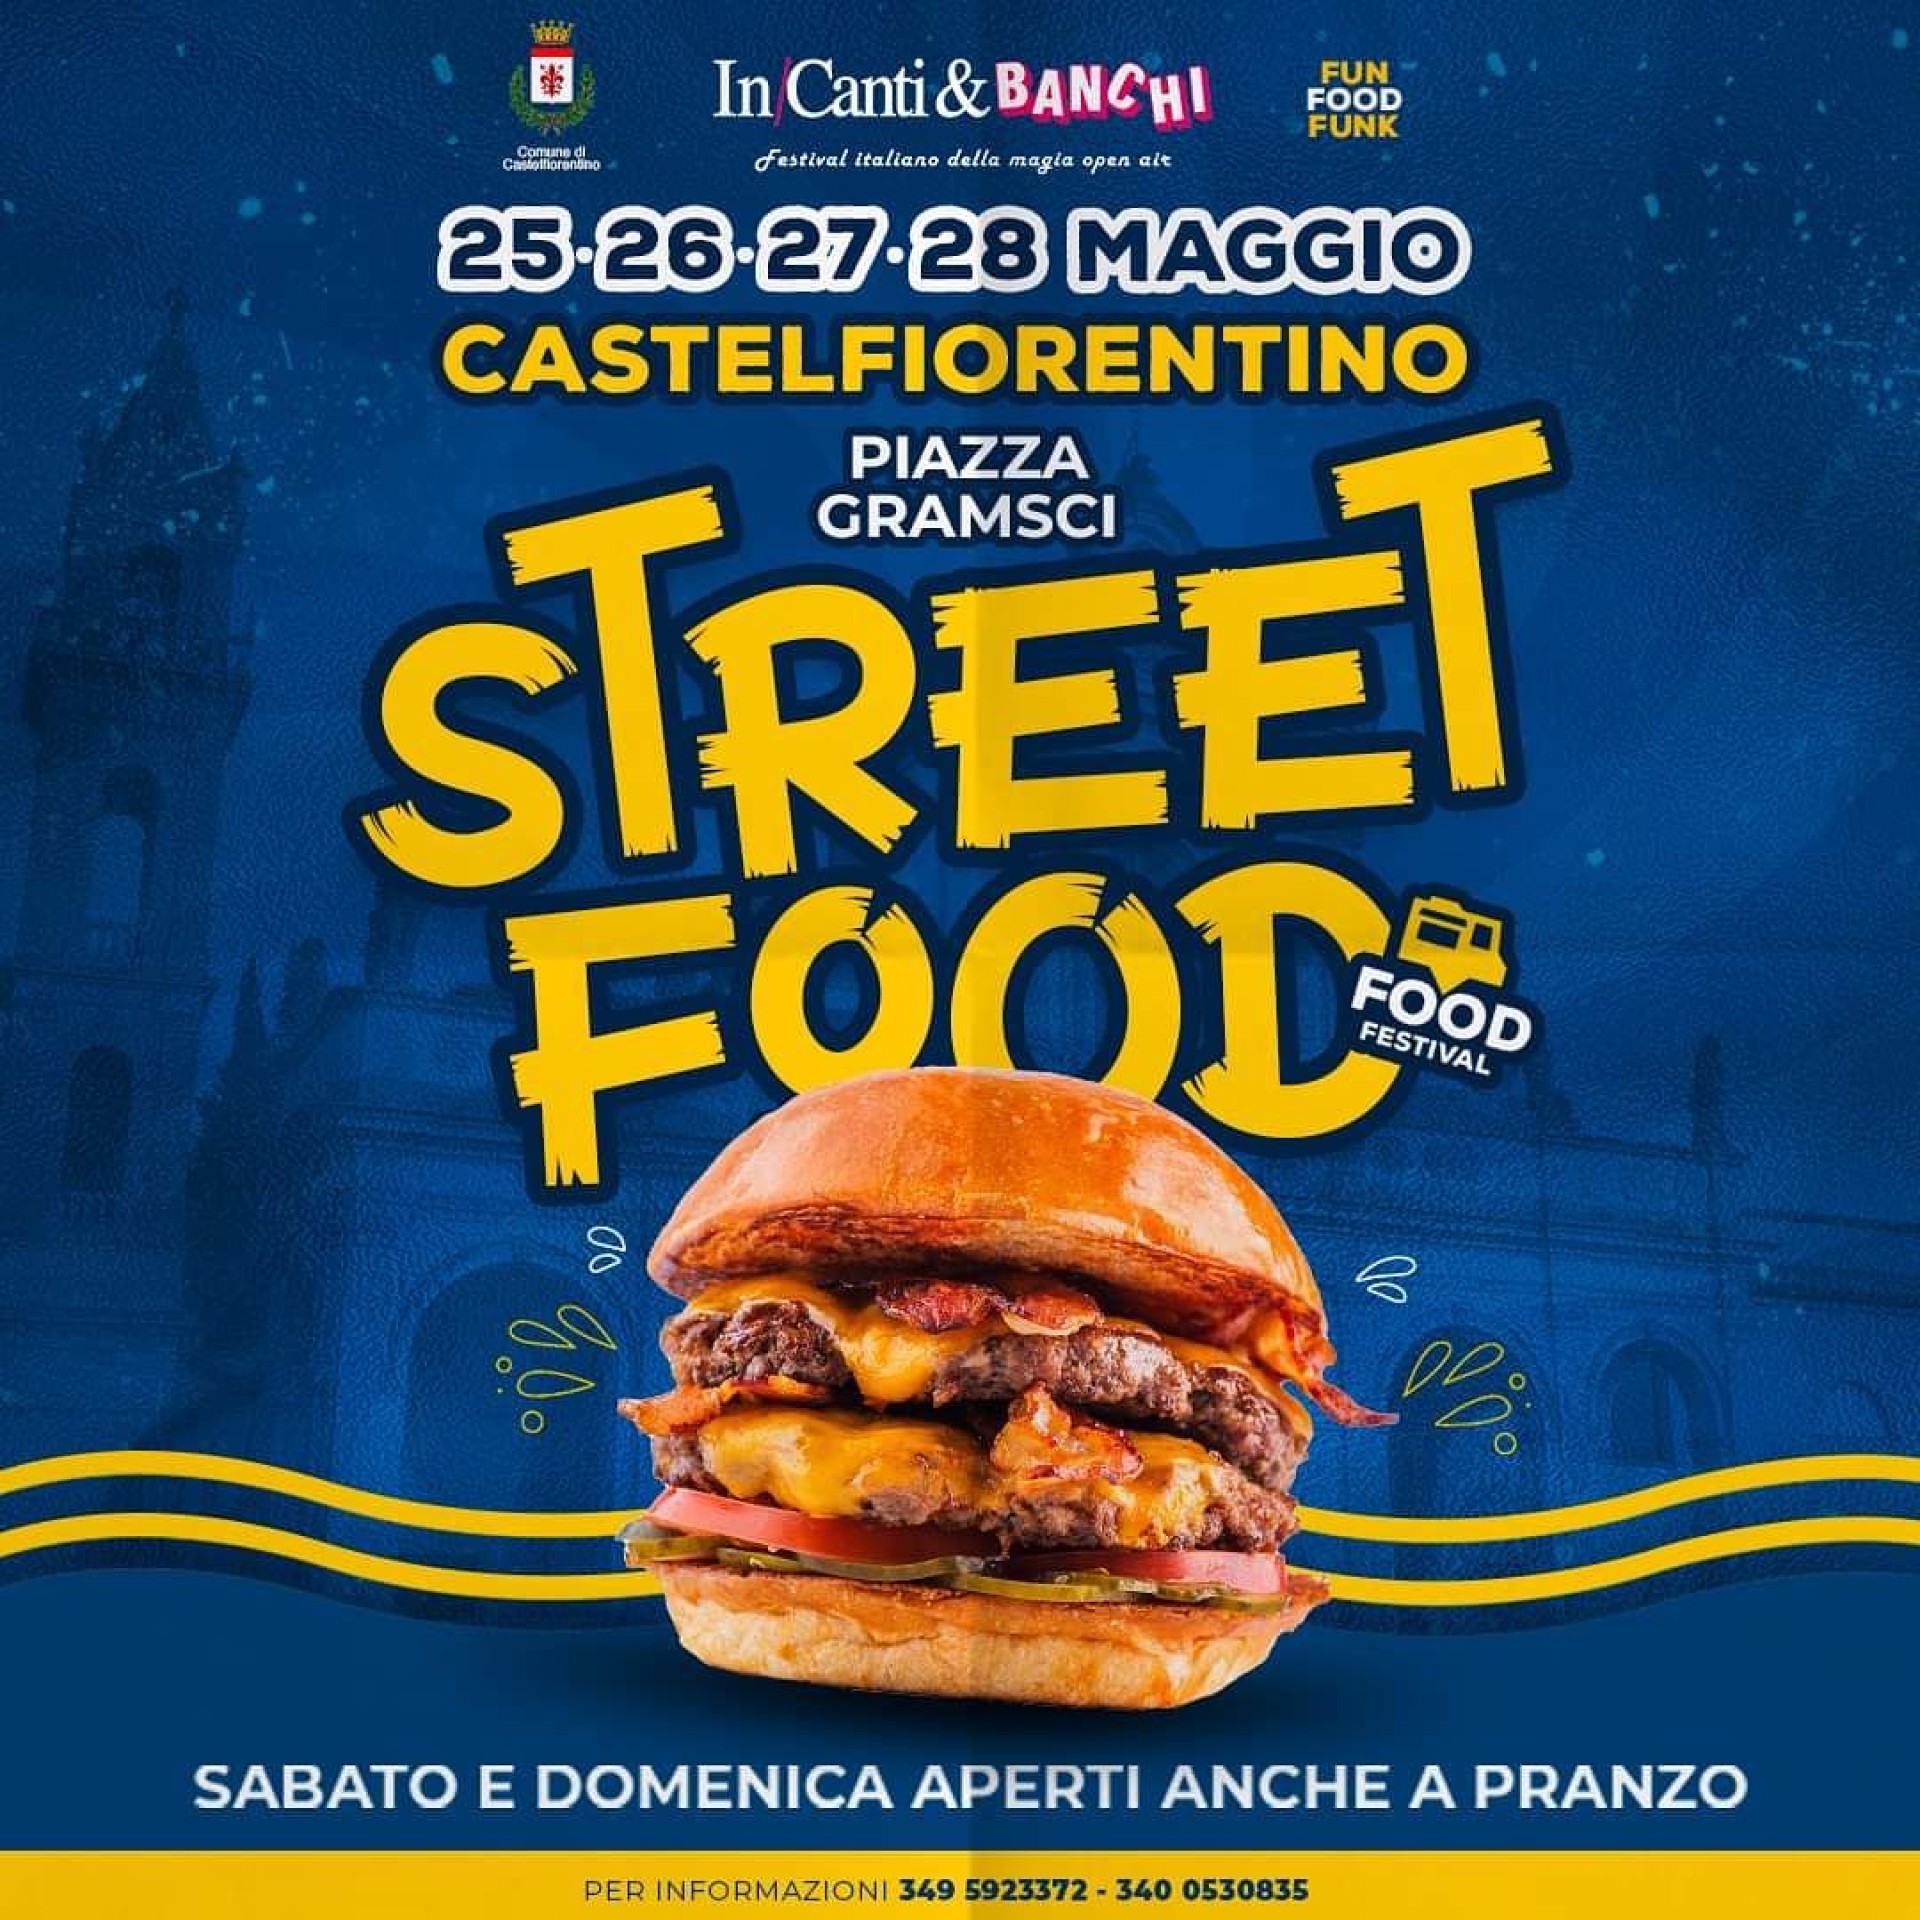 CASTELFIORENTINO STREET FOOD FESTIVAL